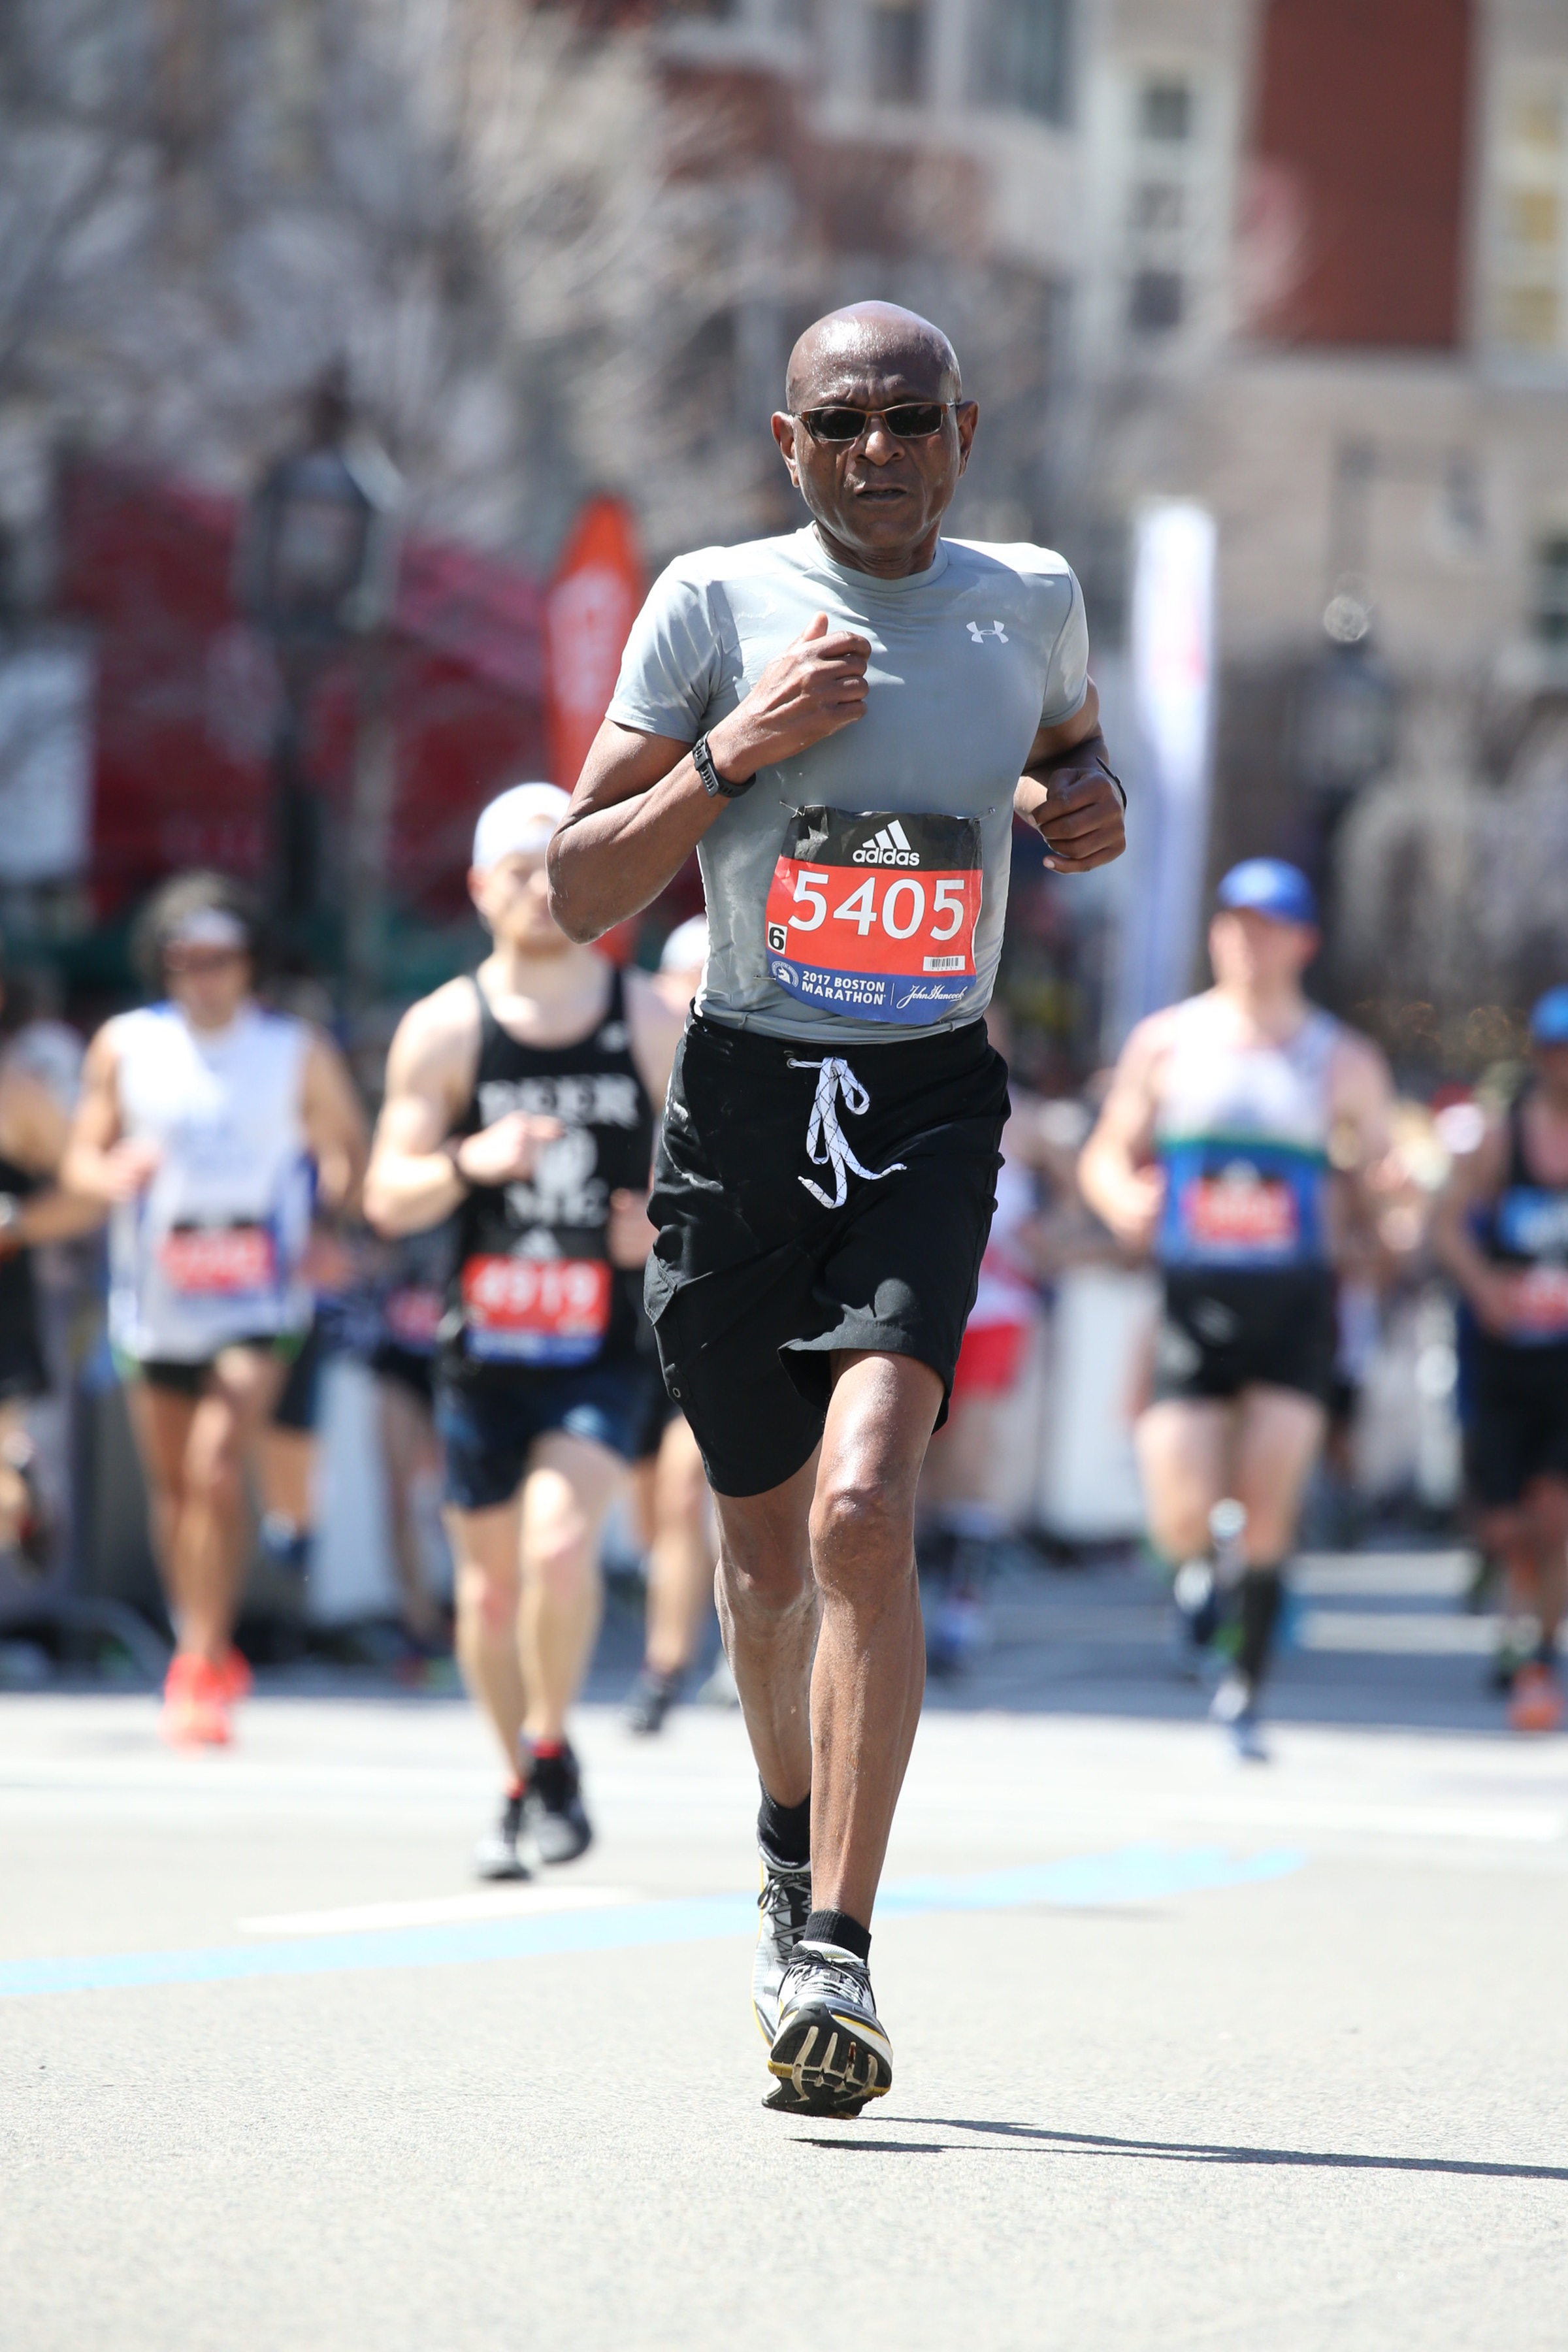 Dr. Joseph Bariyanga placed third in his age group (males 60-64 years) at the 2017 Boston Marathon.